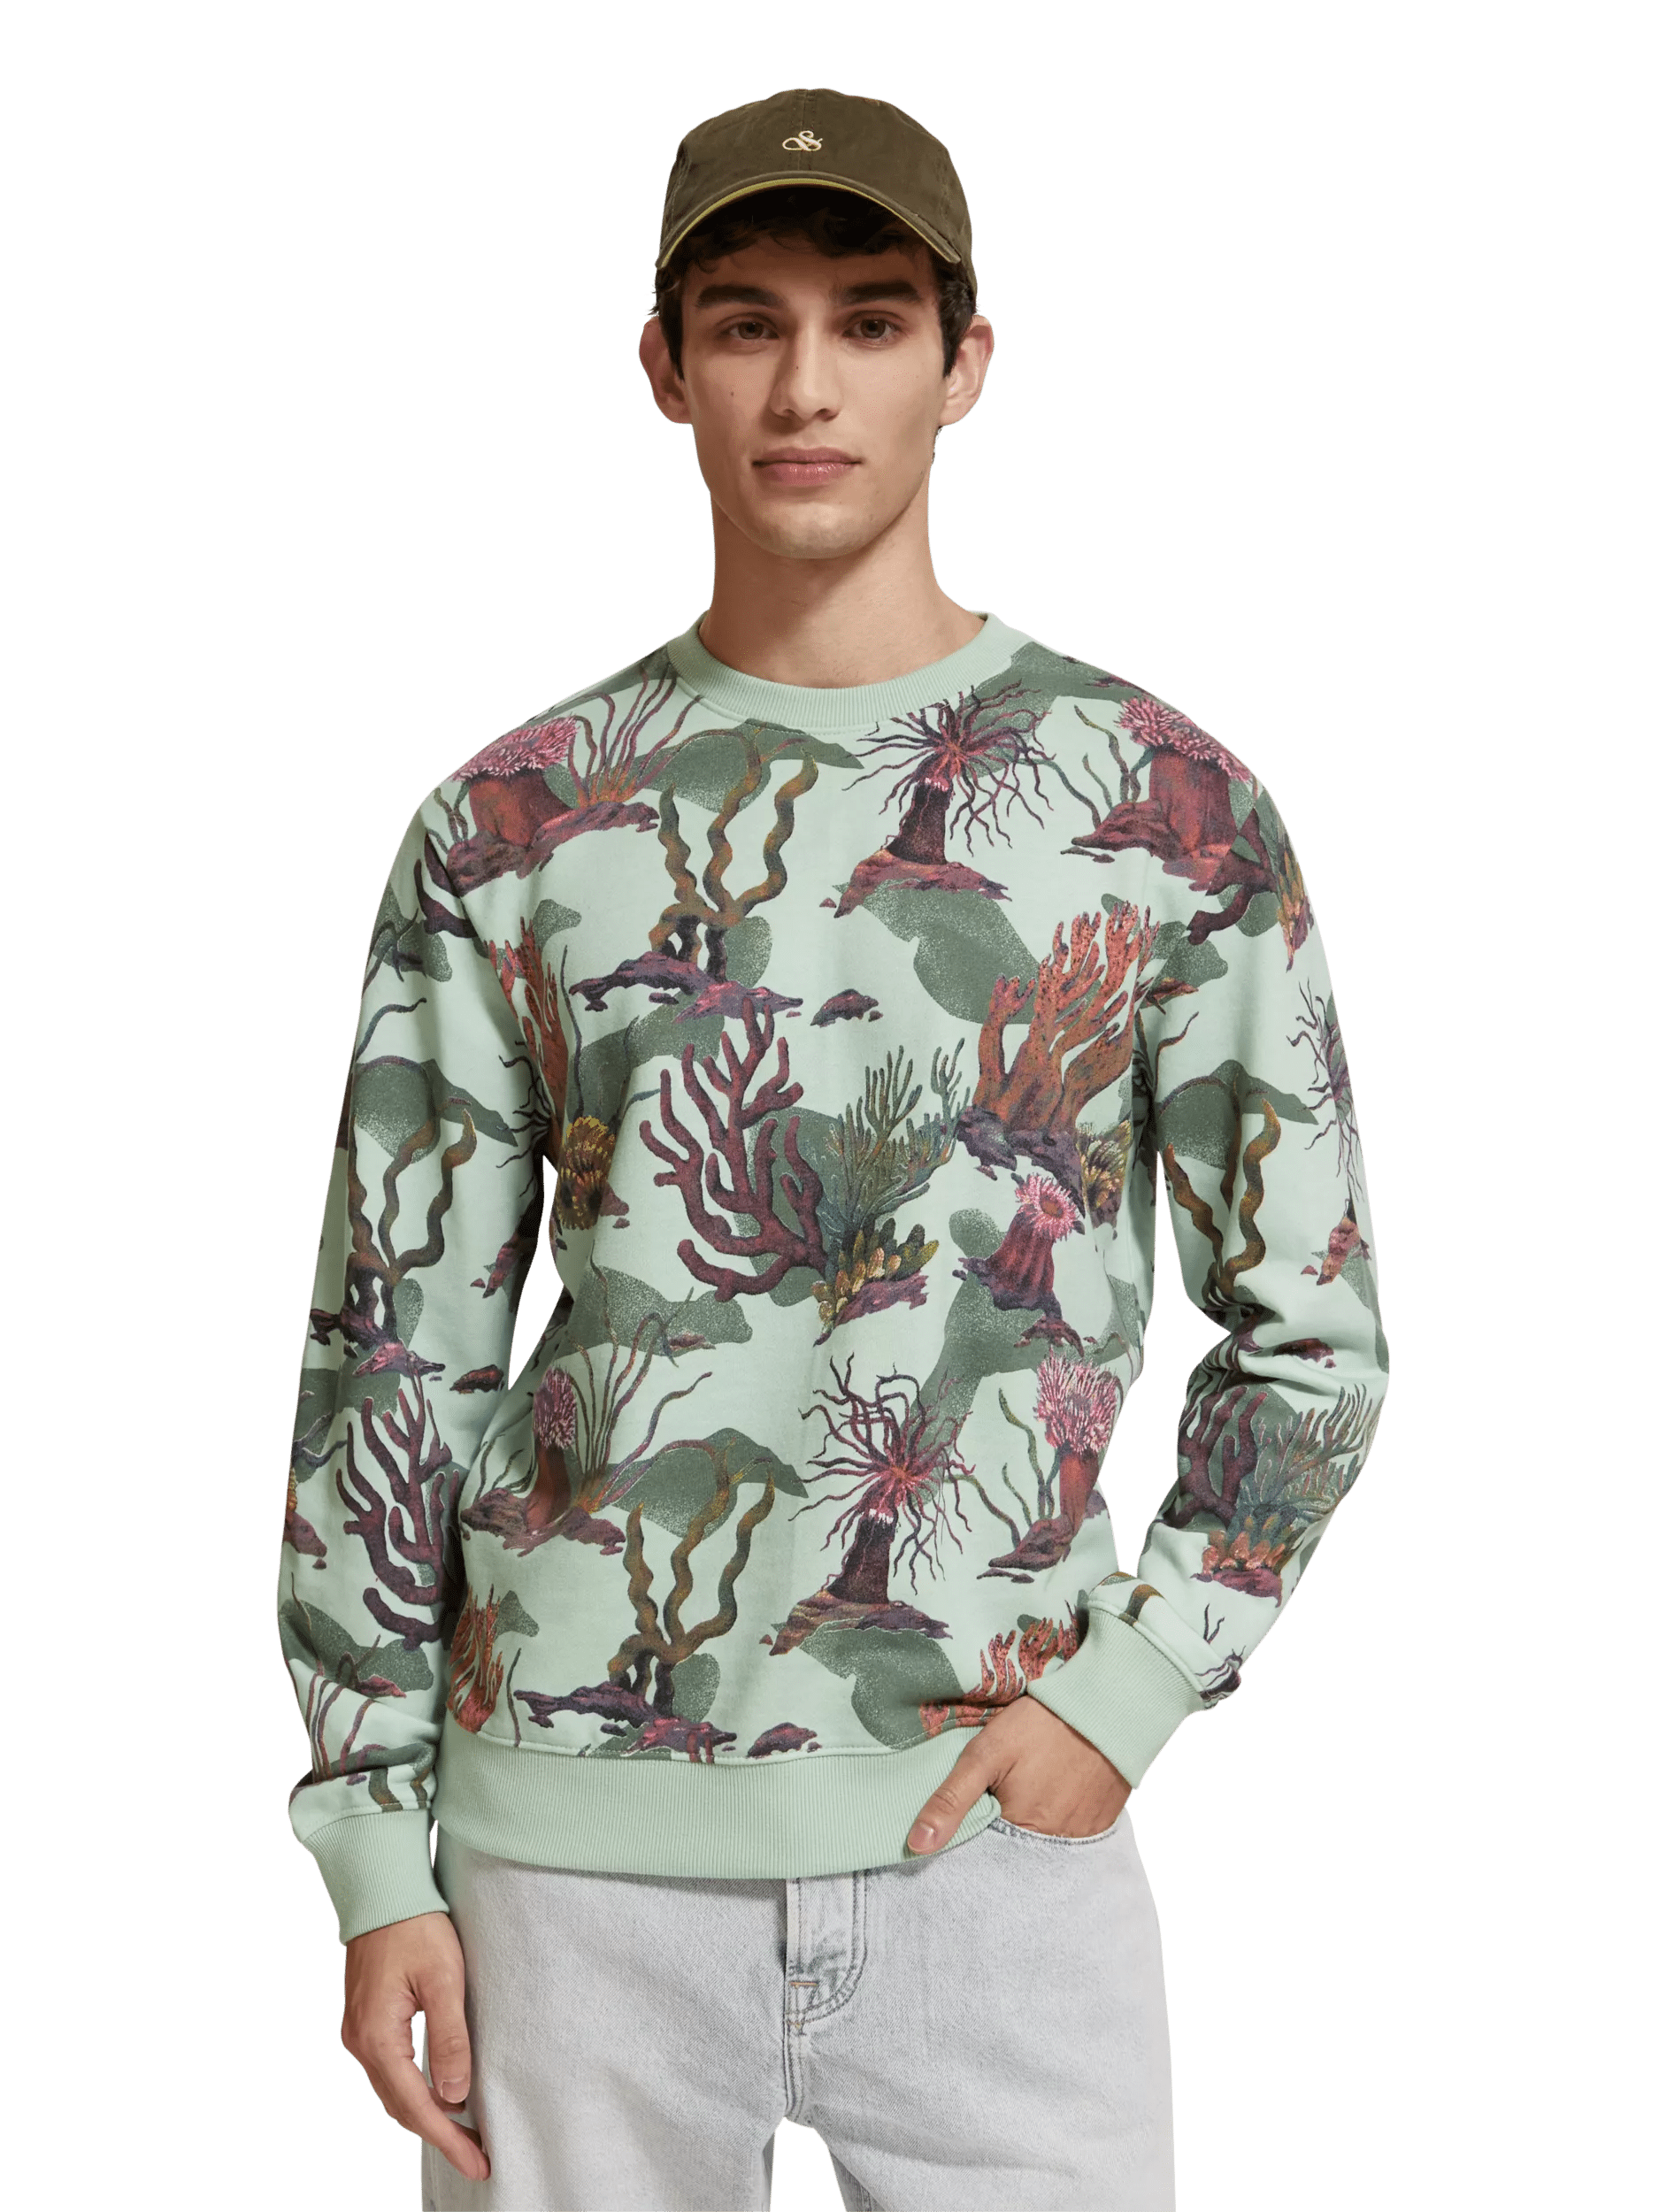 All-over print crewneck sweatshirt